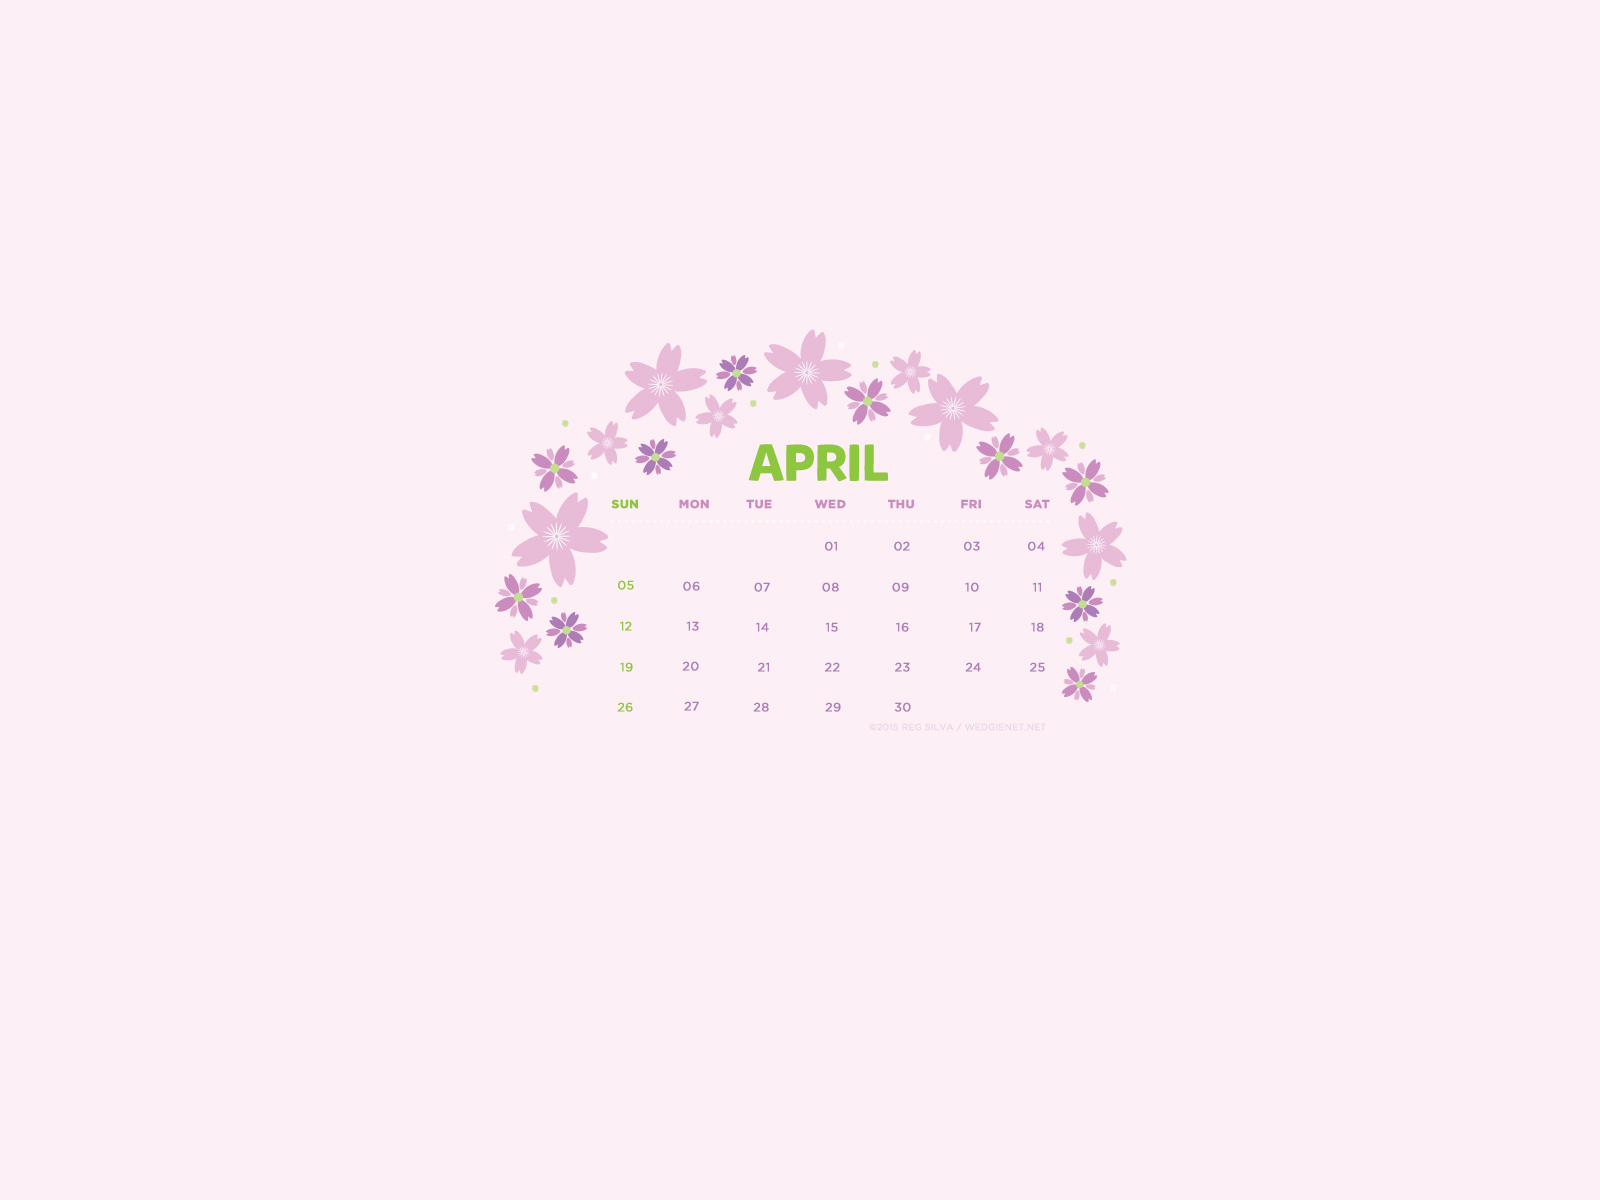 April Desktop iPhone iPad Lock Screen Calendar Wallpaper